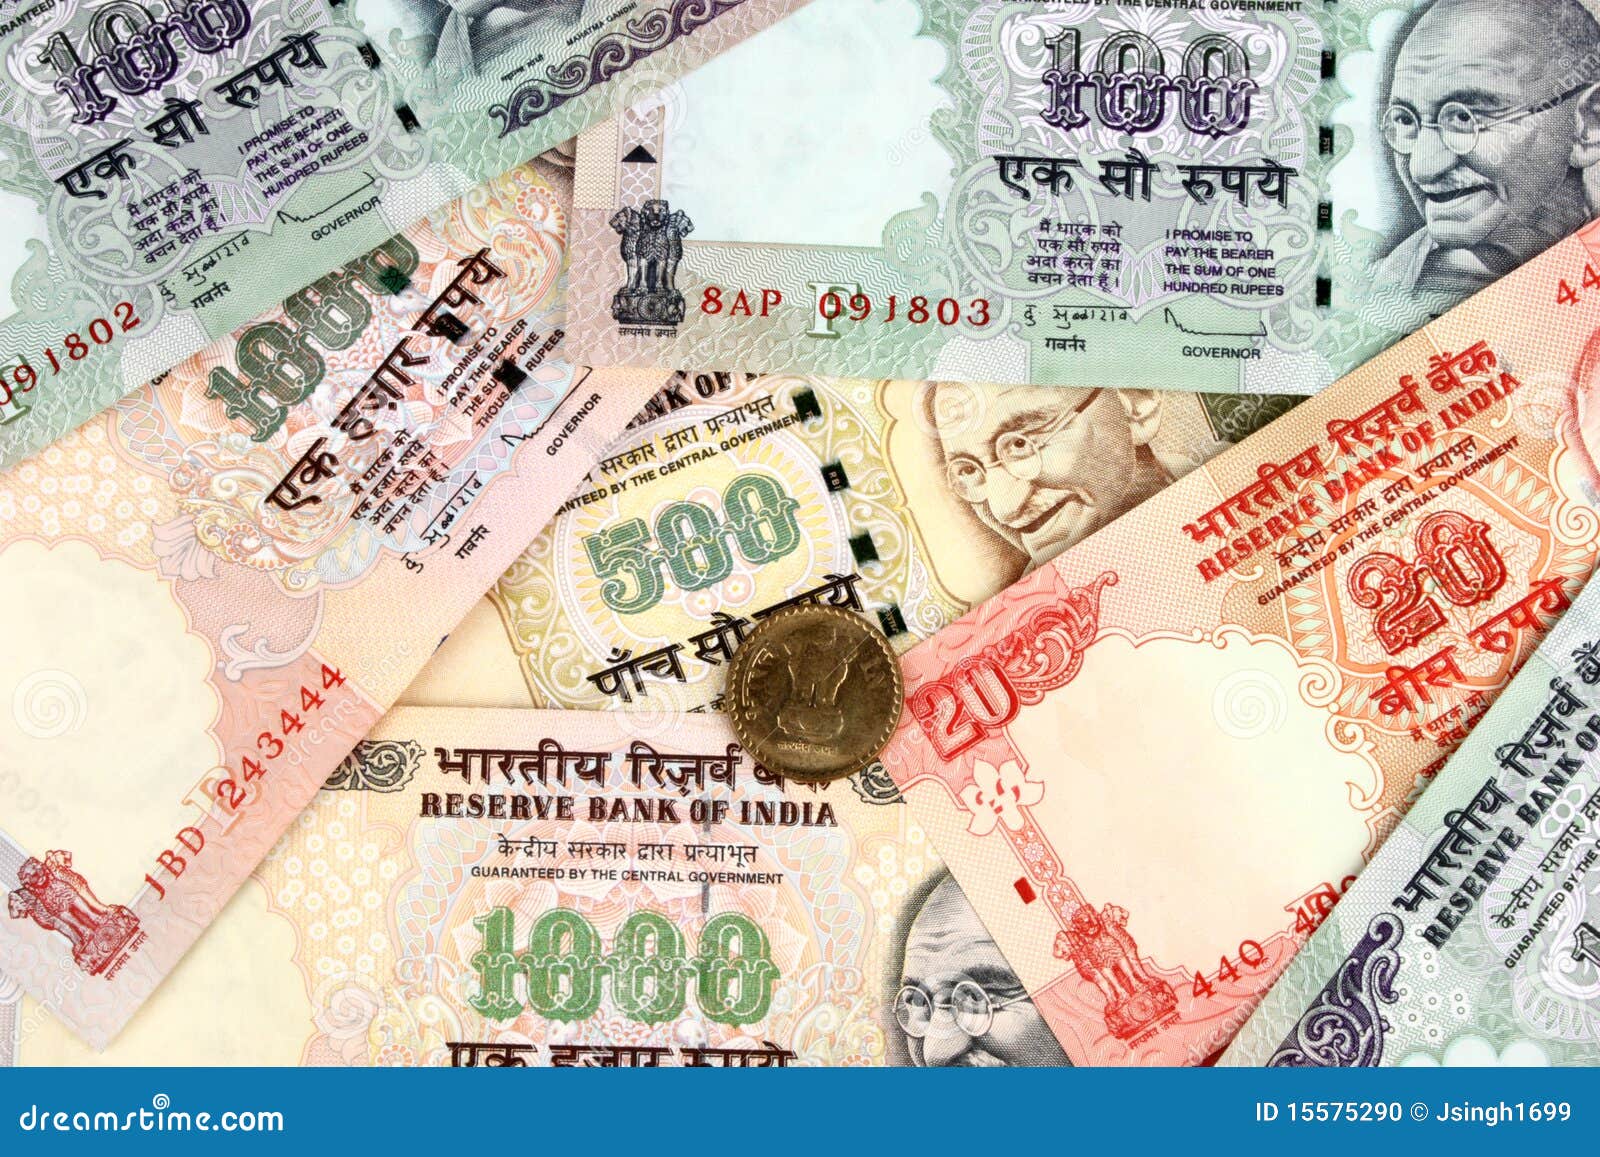 moneymaker india